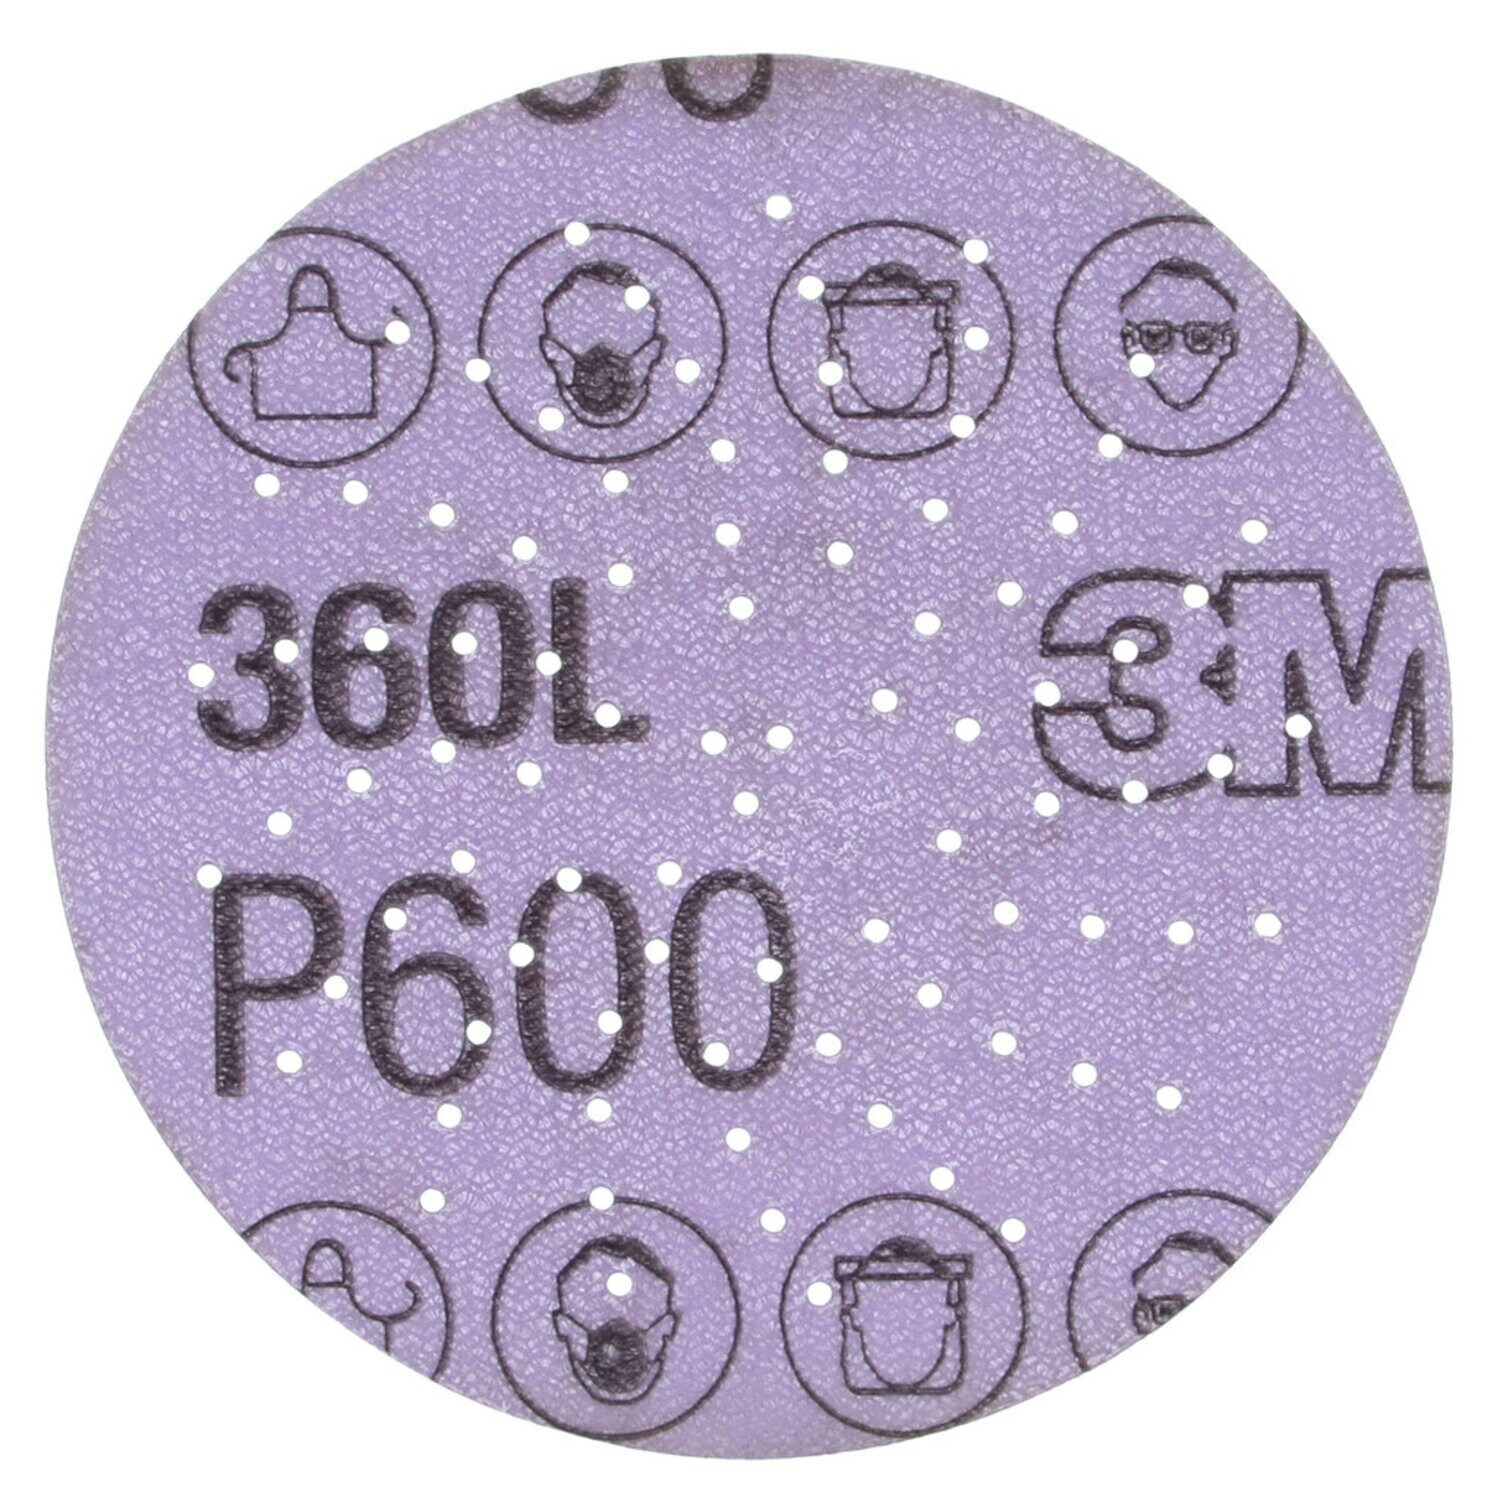 7100010261 - 3M Xtract Film Disc 360L, P600 3MIL, 3 in, Die 300LG, 100/Carton, 500
ea/Case